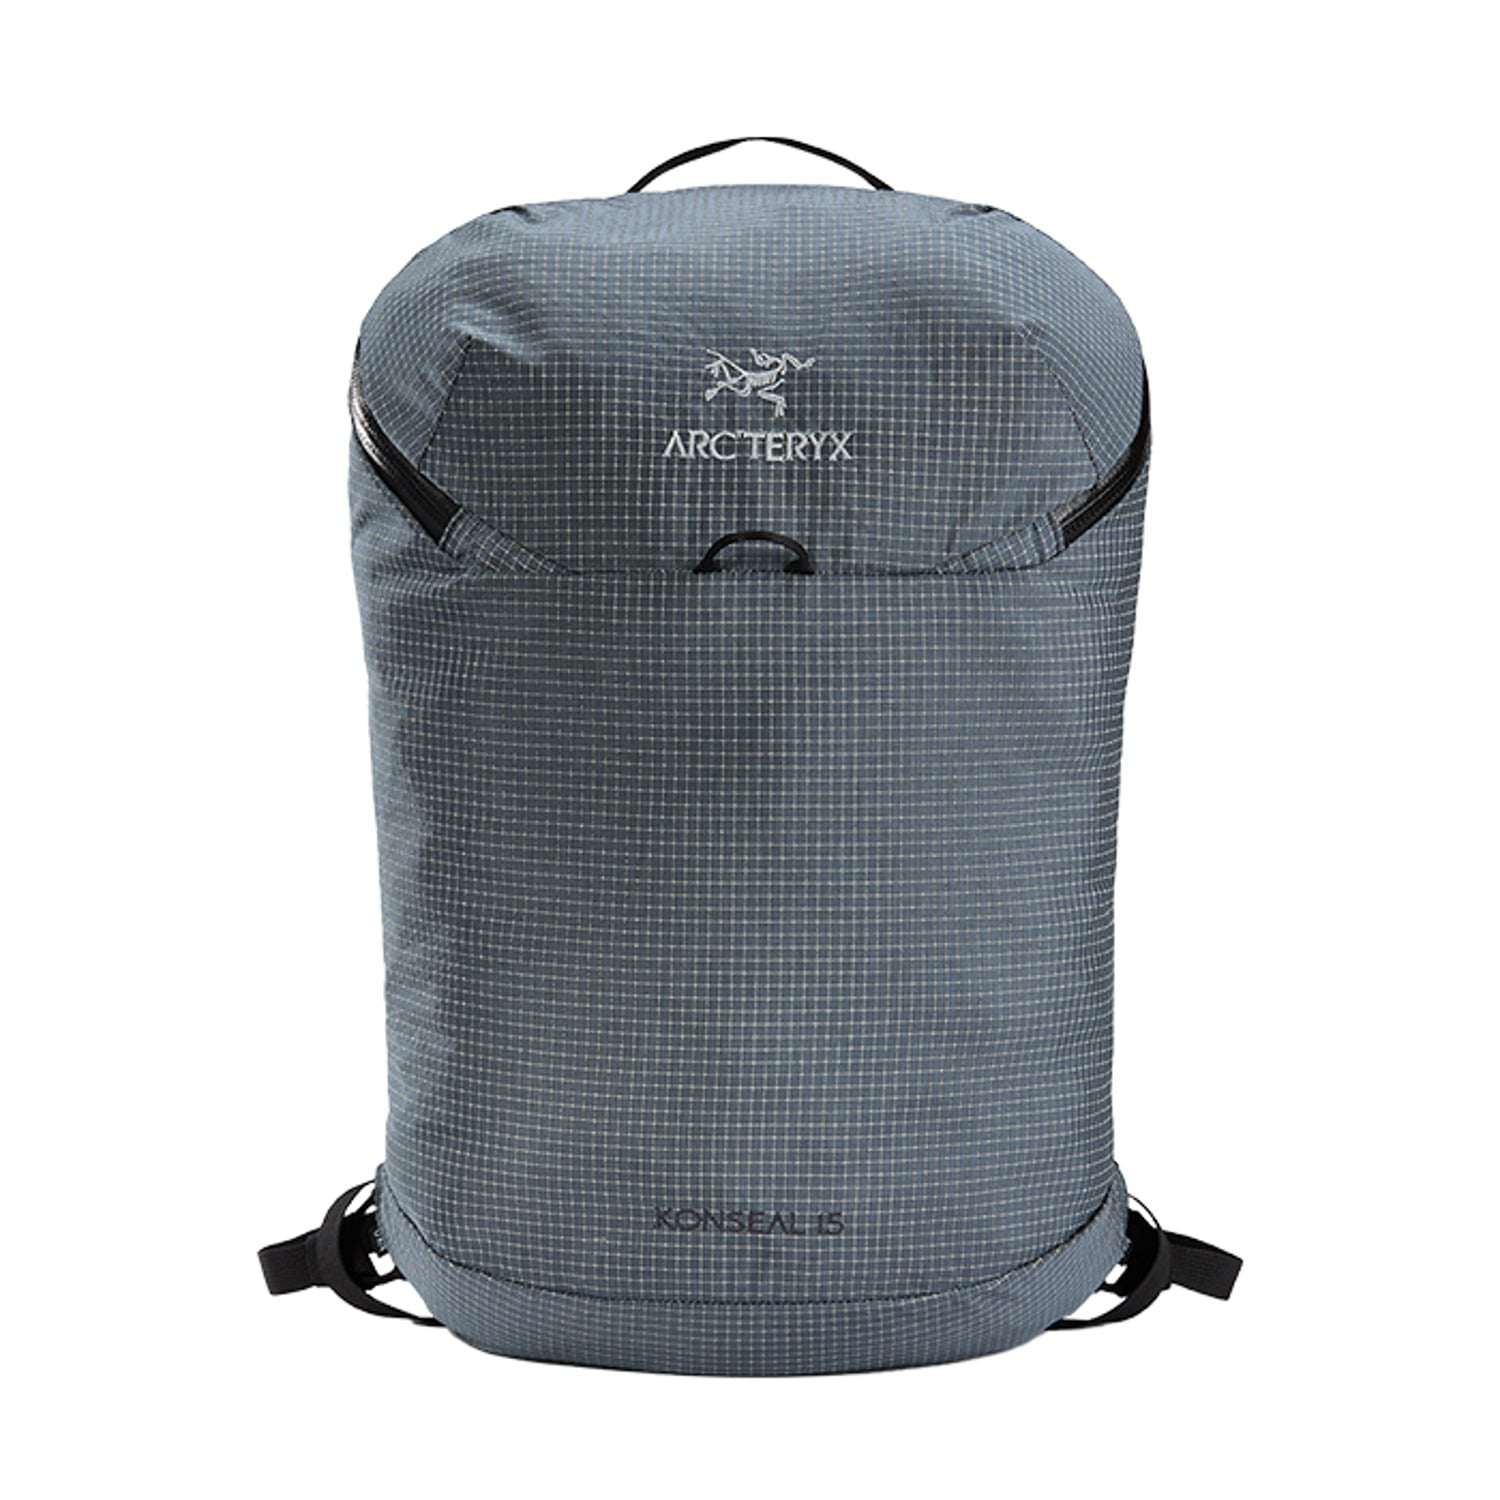 konseal 15 backpack neptune